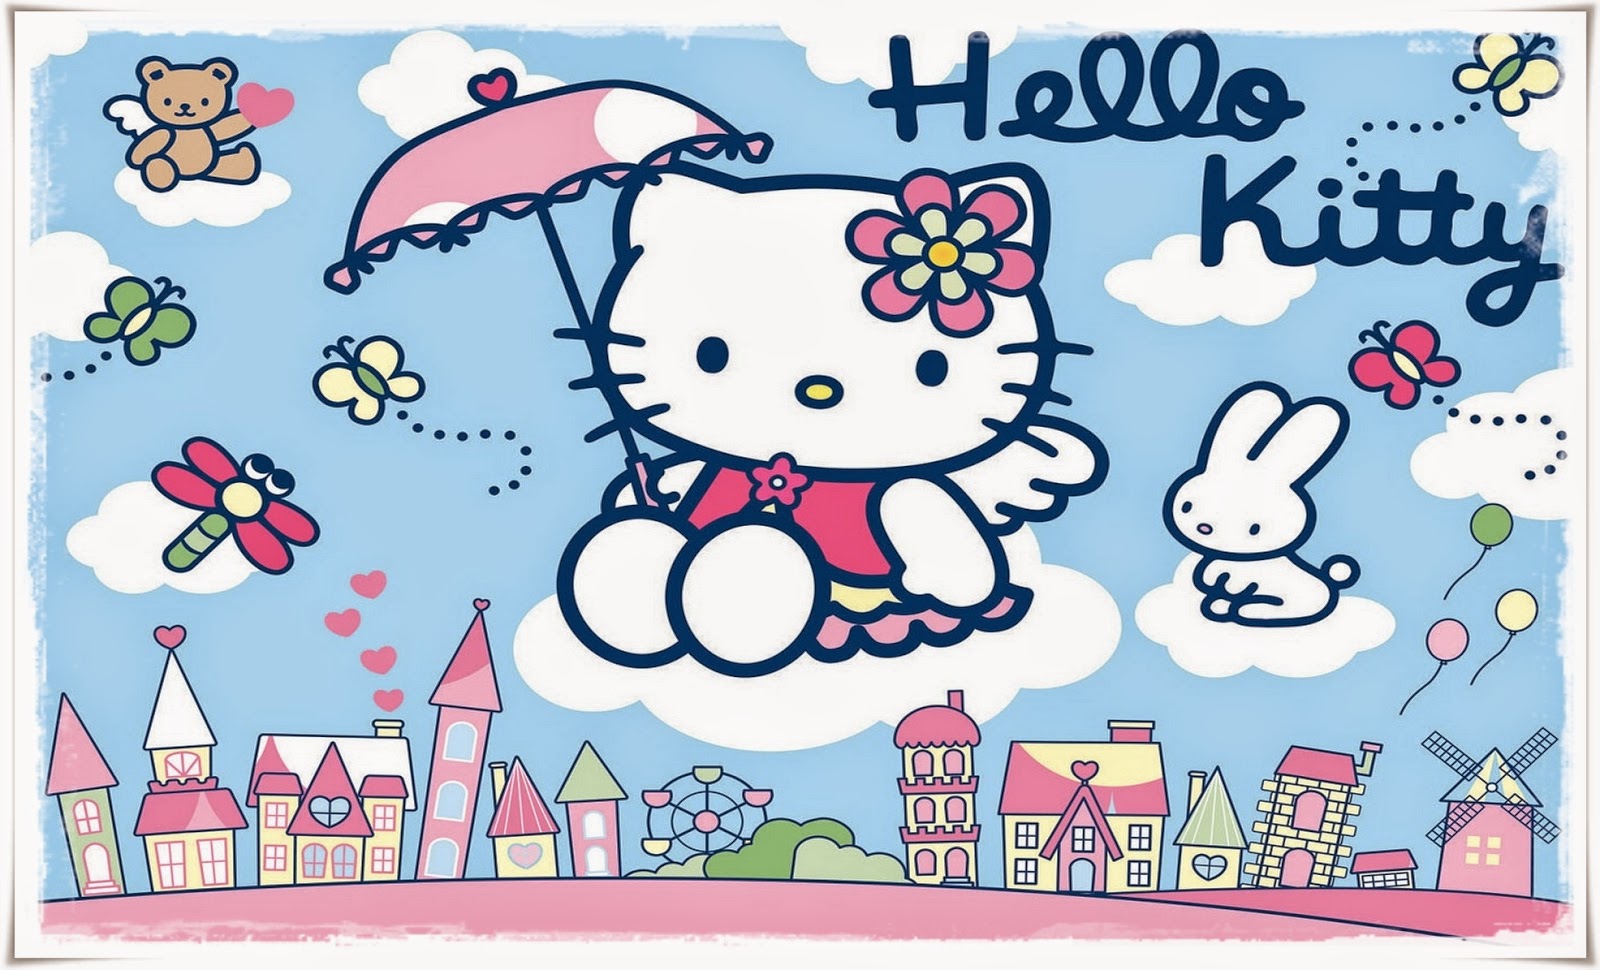  Gambar  Hello  Kitty  Di Buku  Gambar  Terkini Banget